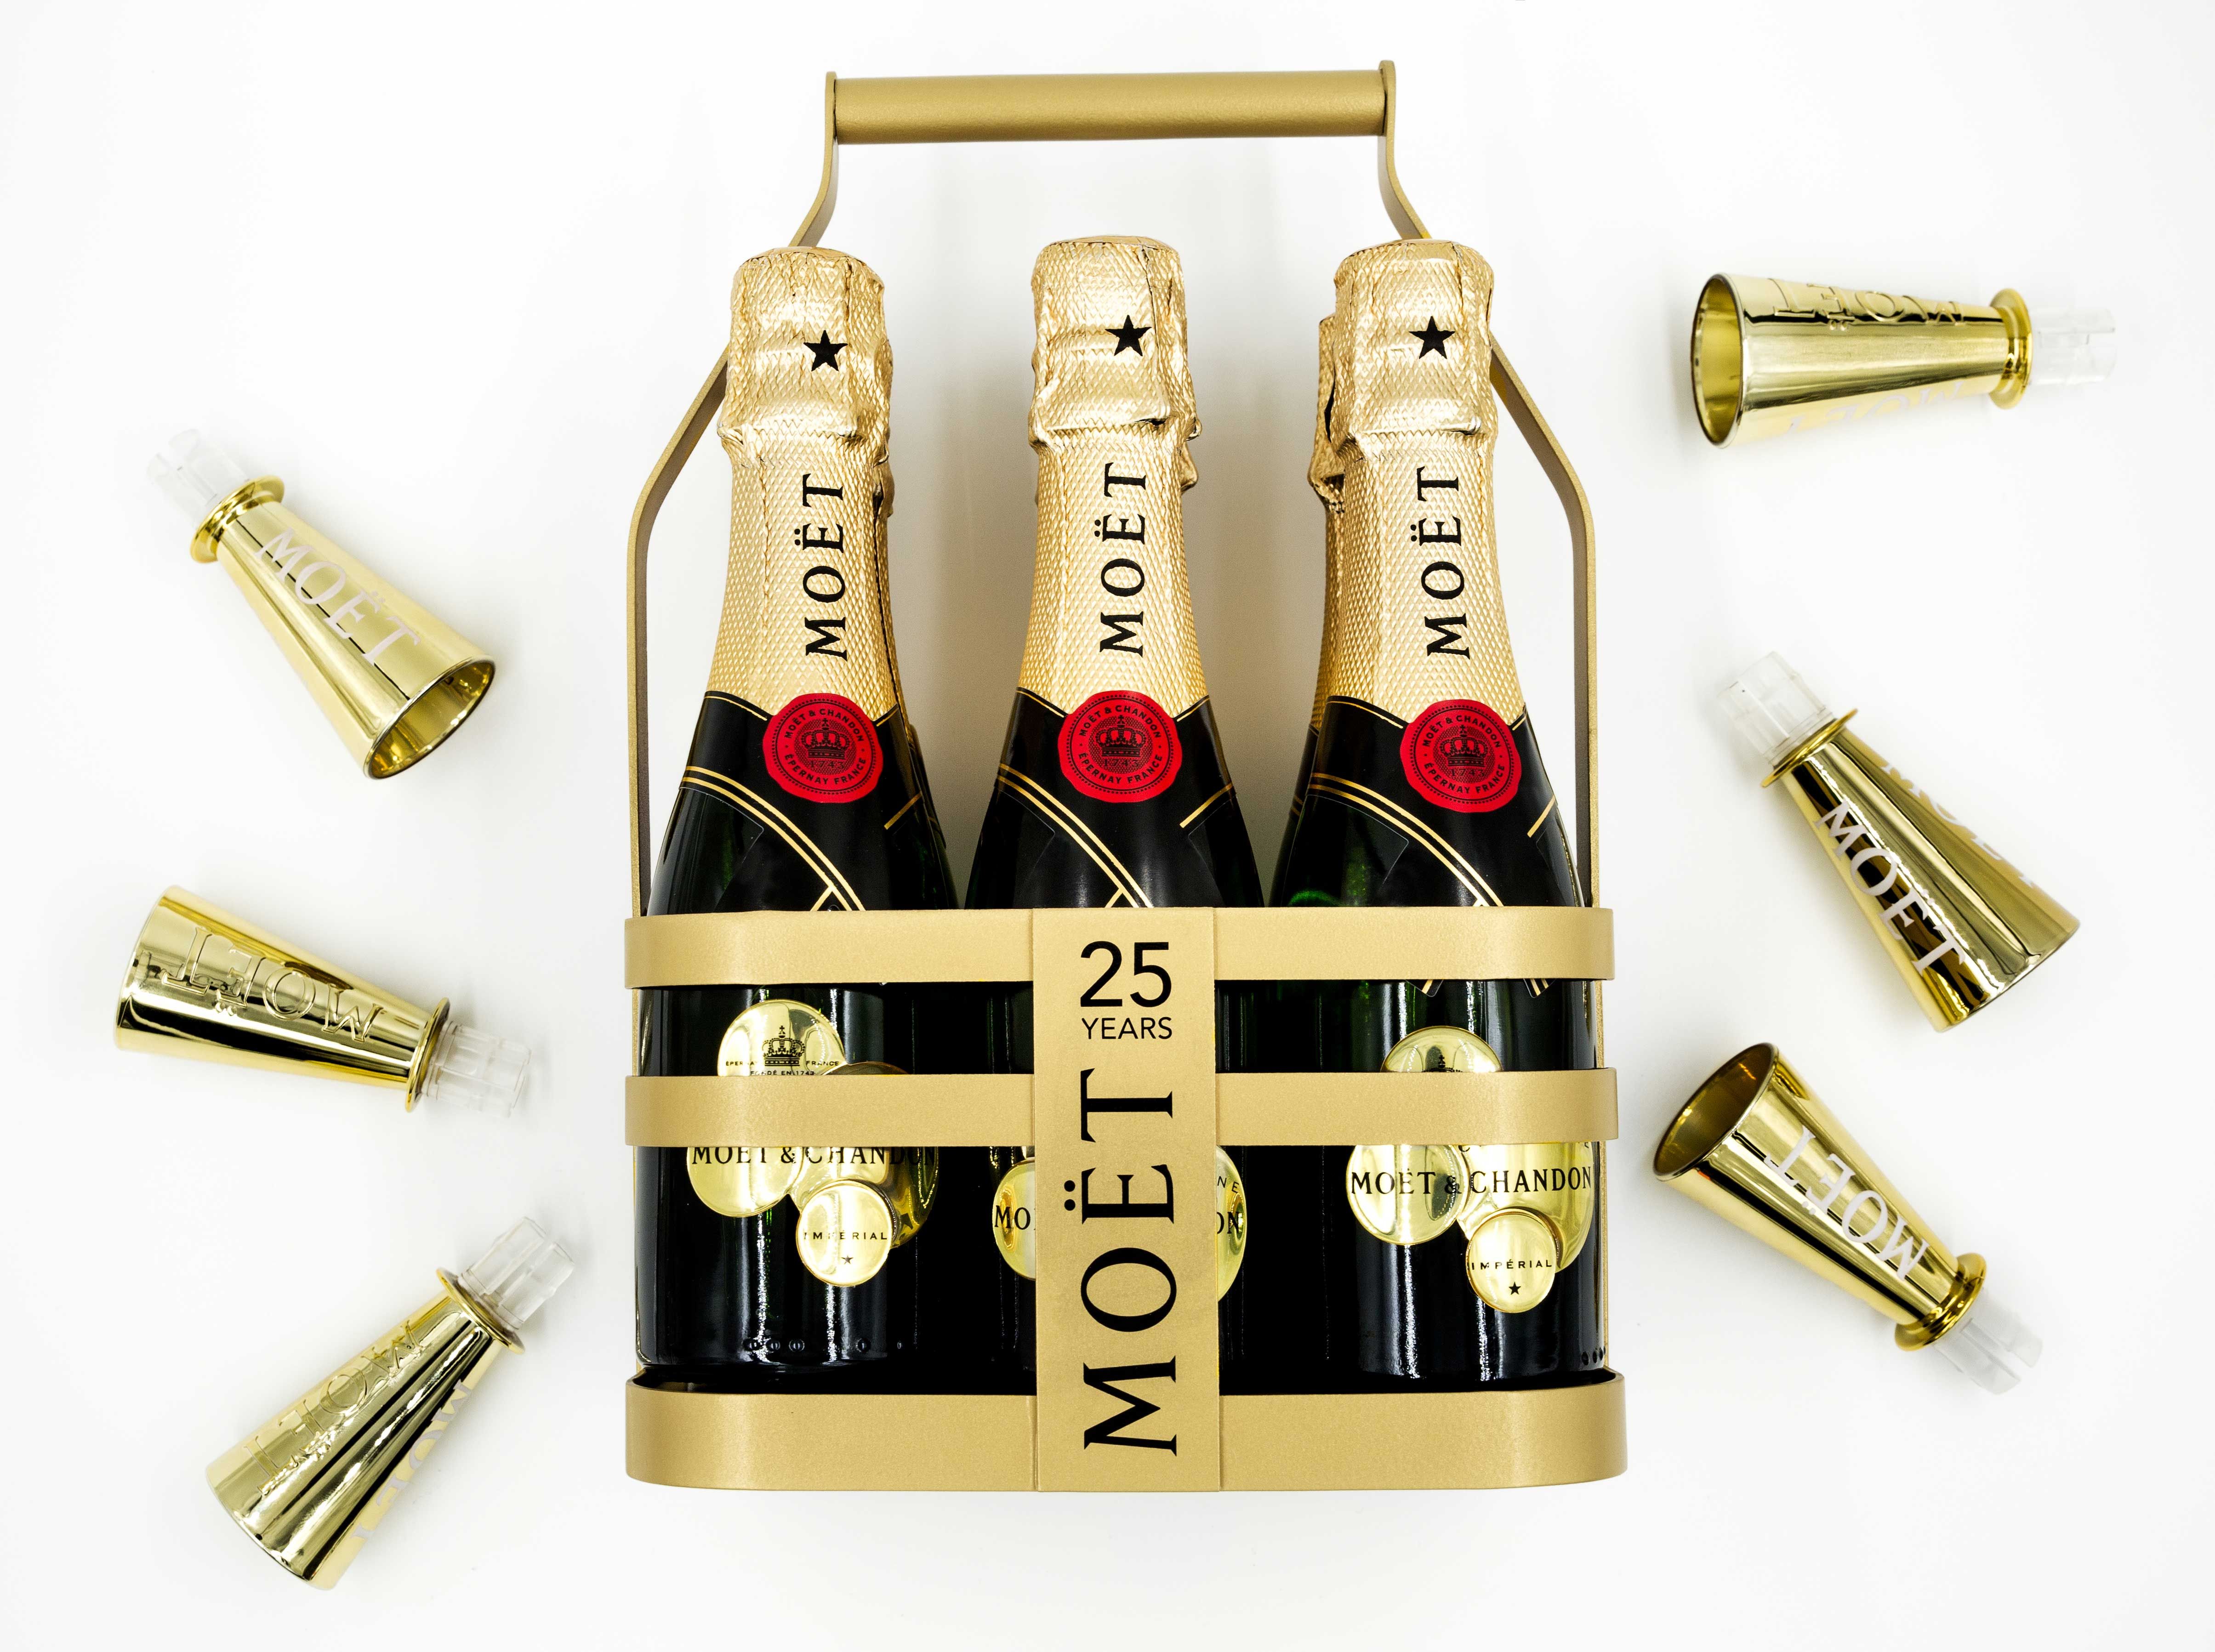 Moët Et Chandon Champagne Caddy - Golden Globes Party Gift